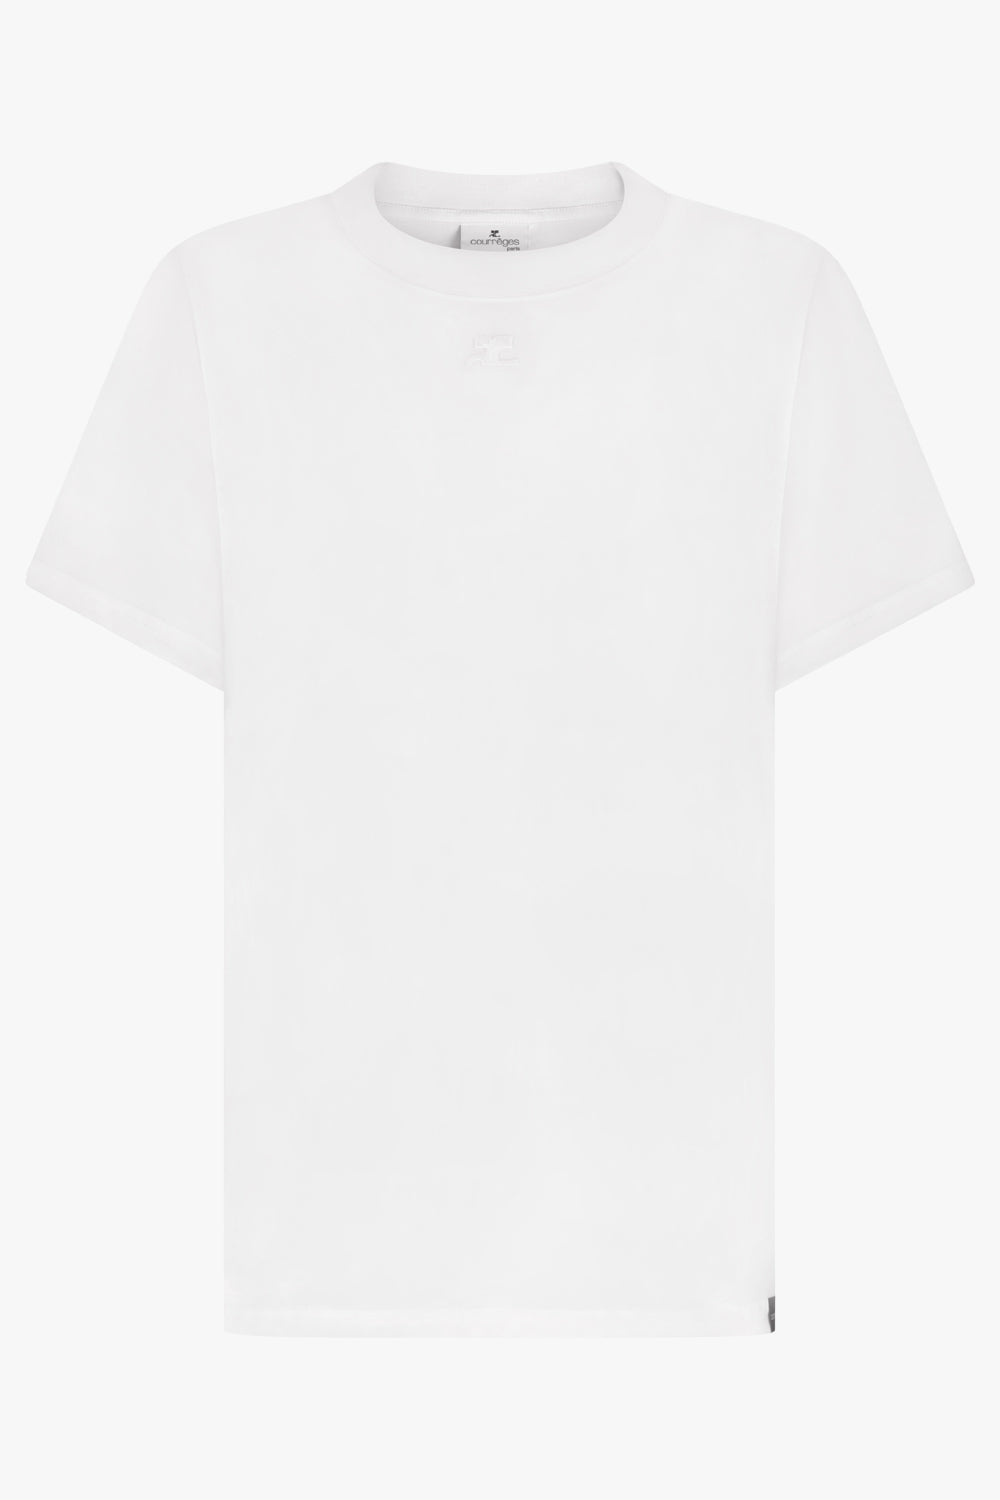 COURREGES RTW Classic AC T-Shirt | Heritage White